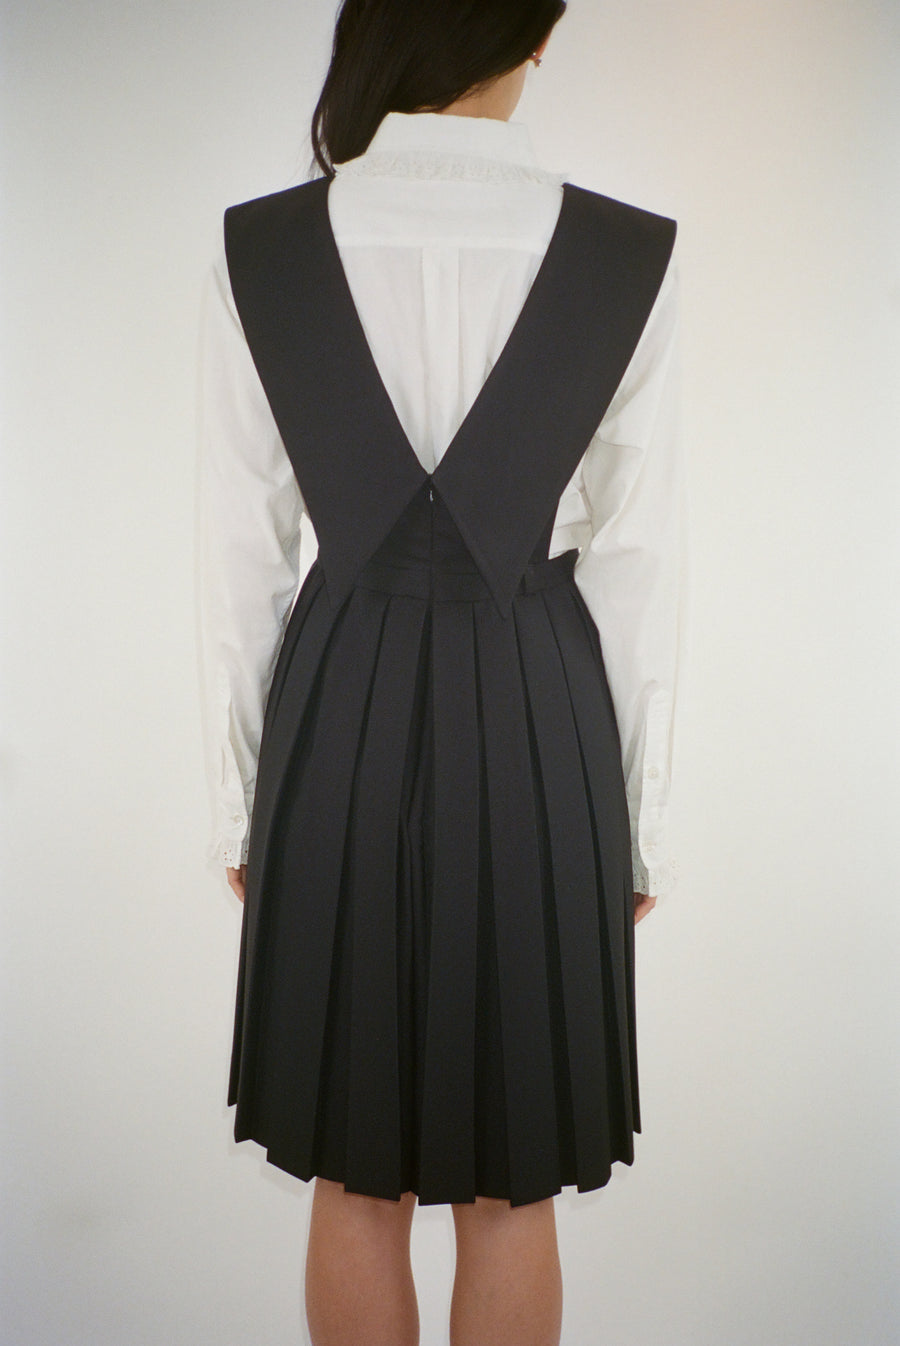 Knee length pinafore dress in black